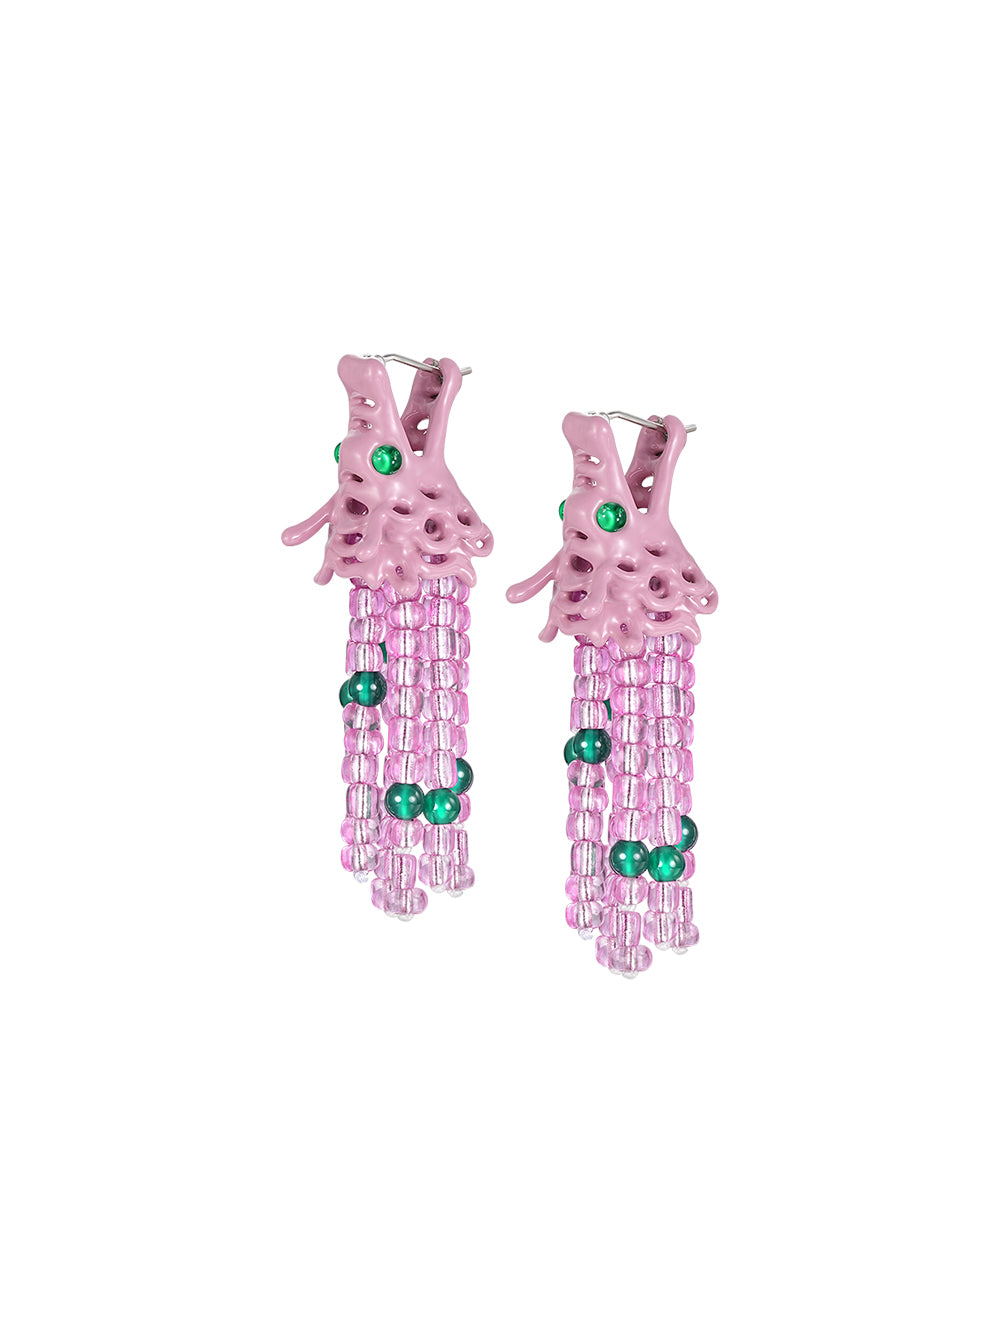 MUKTANK x GEL E LUA Beads  Dragon Earrings